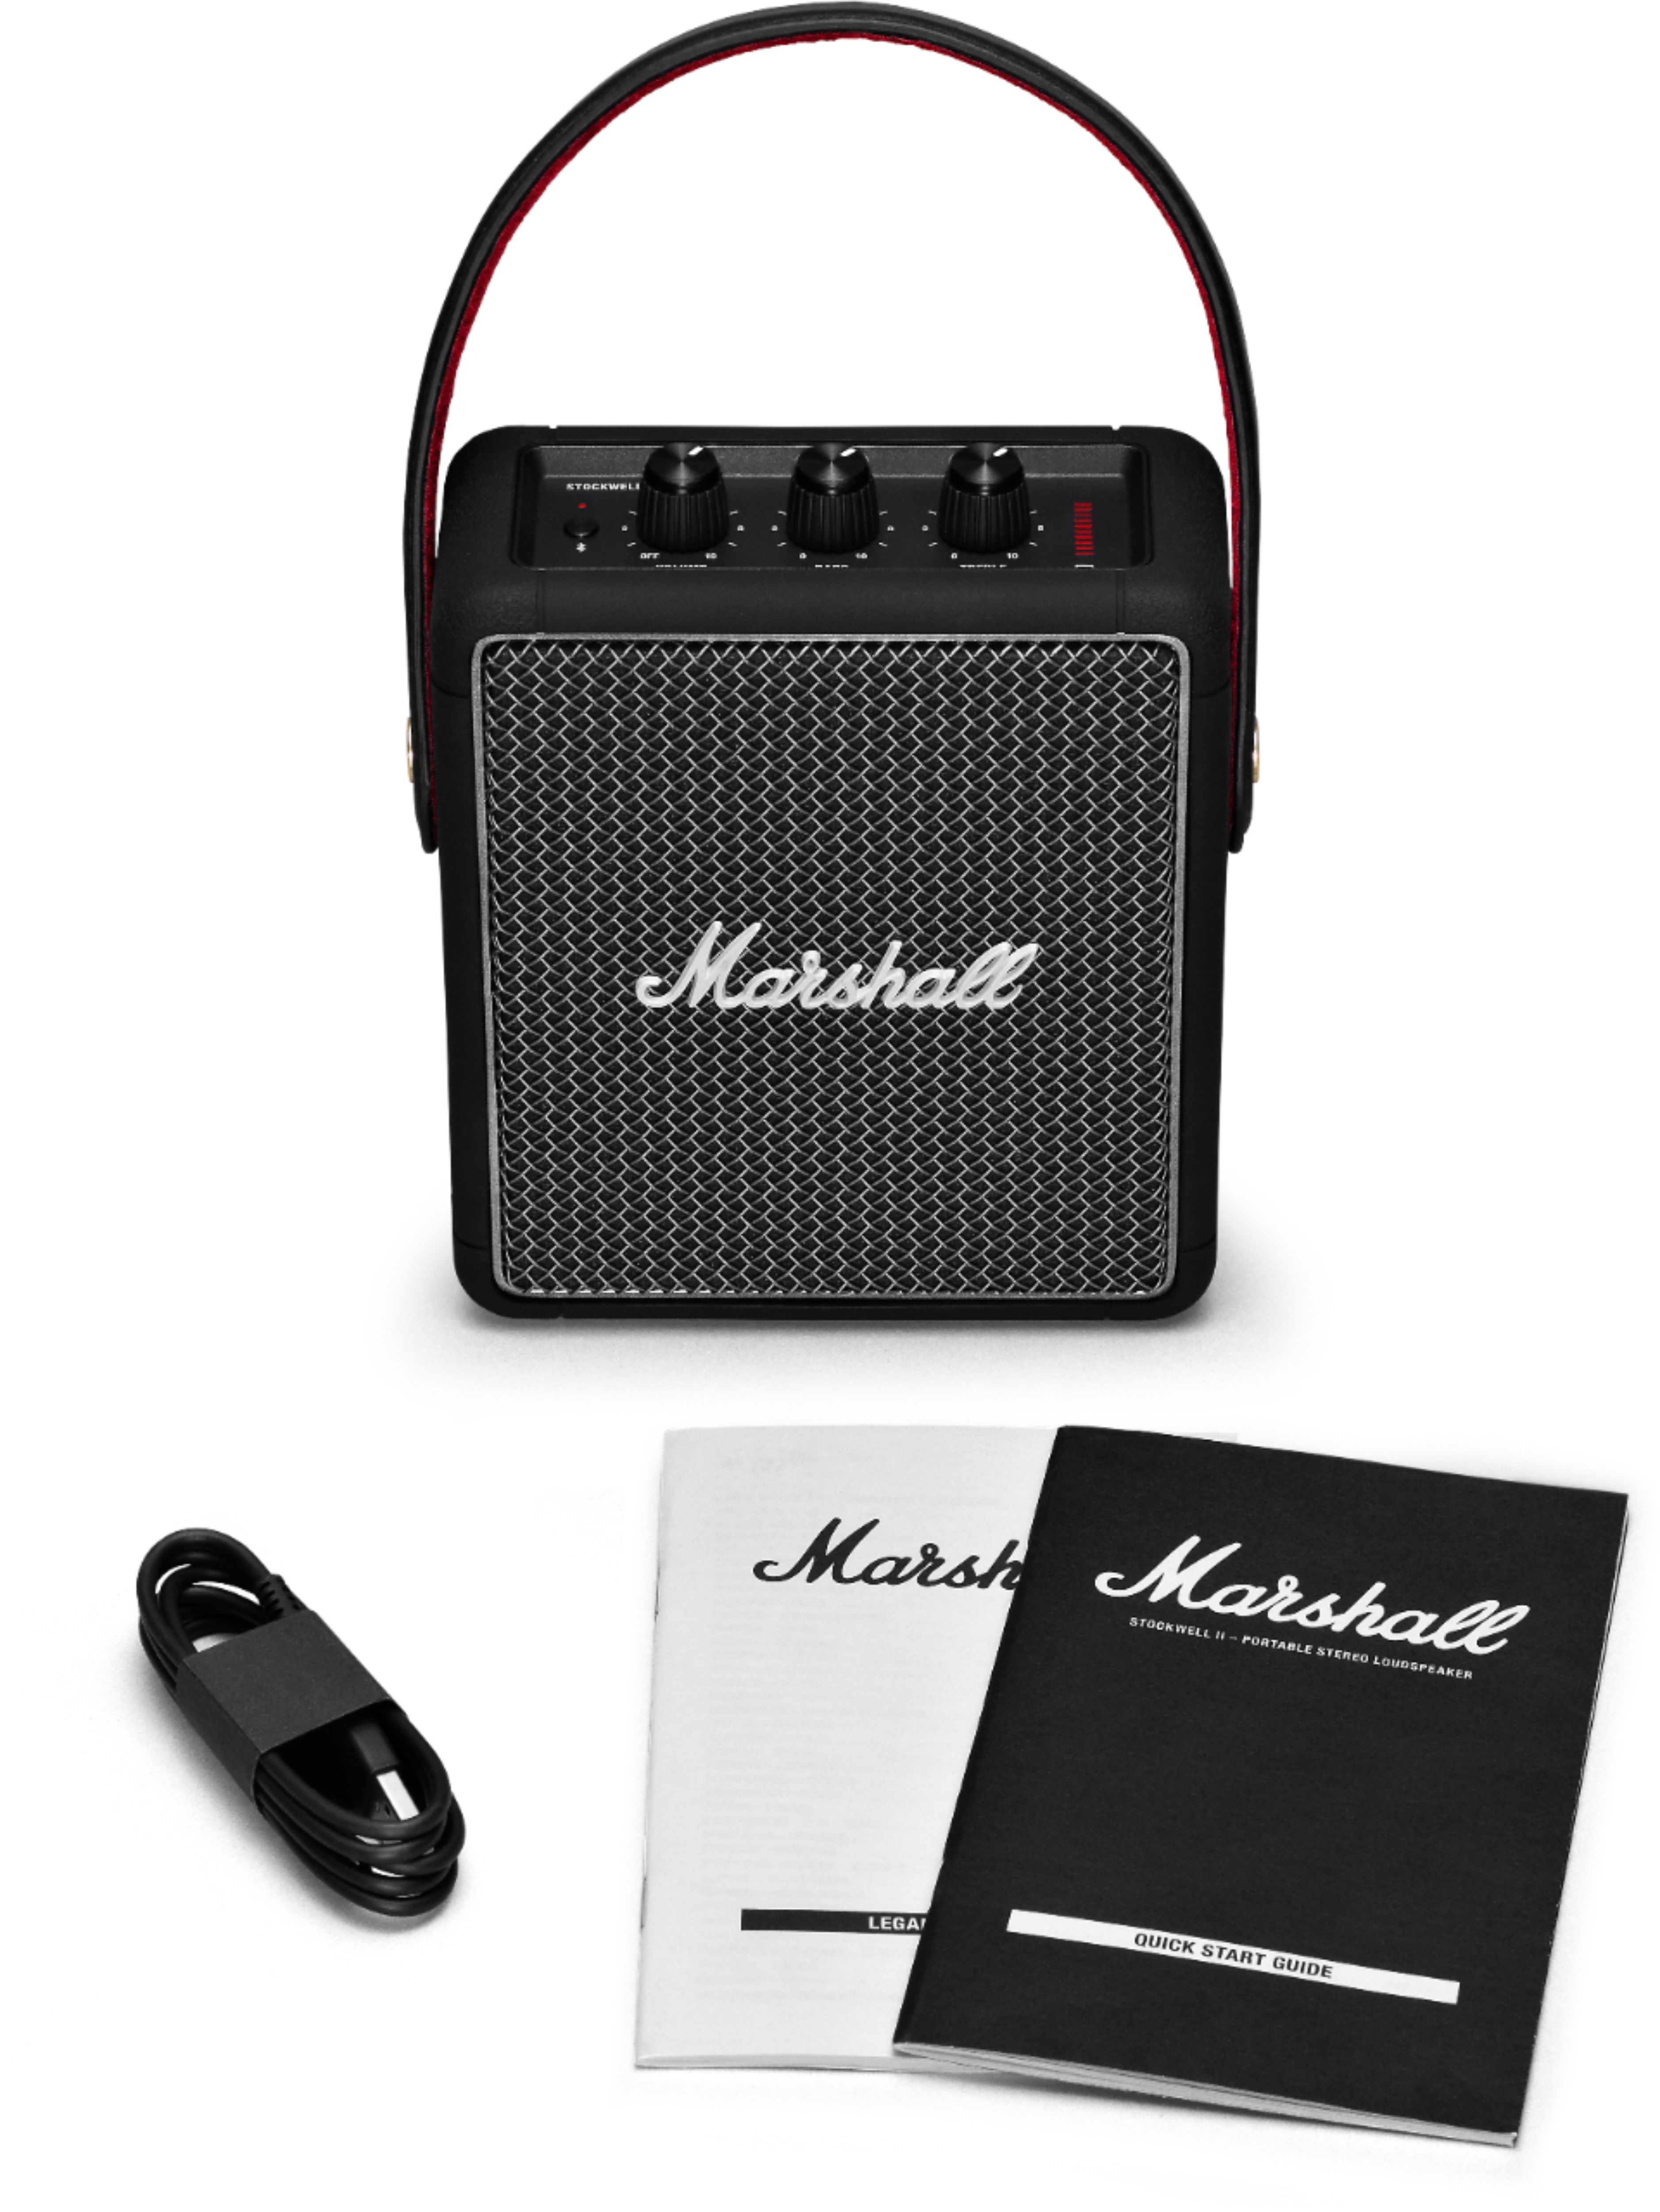 Best Buy: Marshall Stockwell II Portable Bluetooth Speaker Black